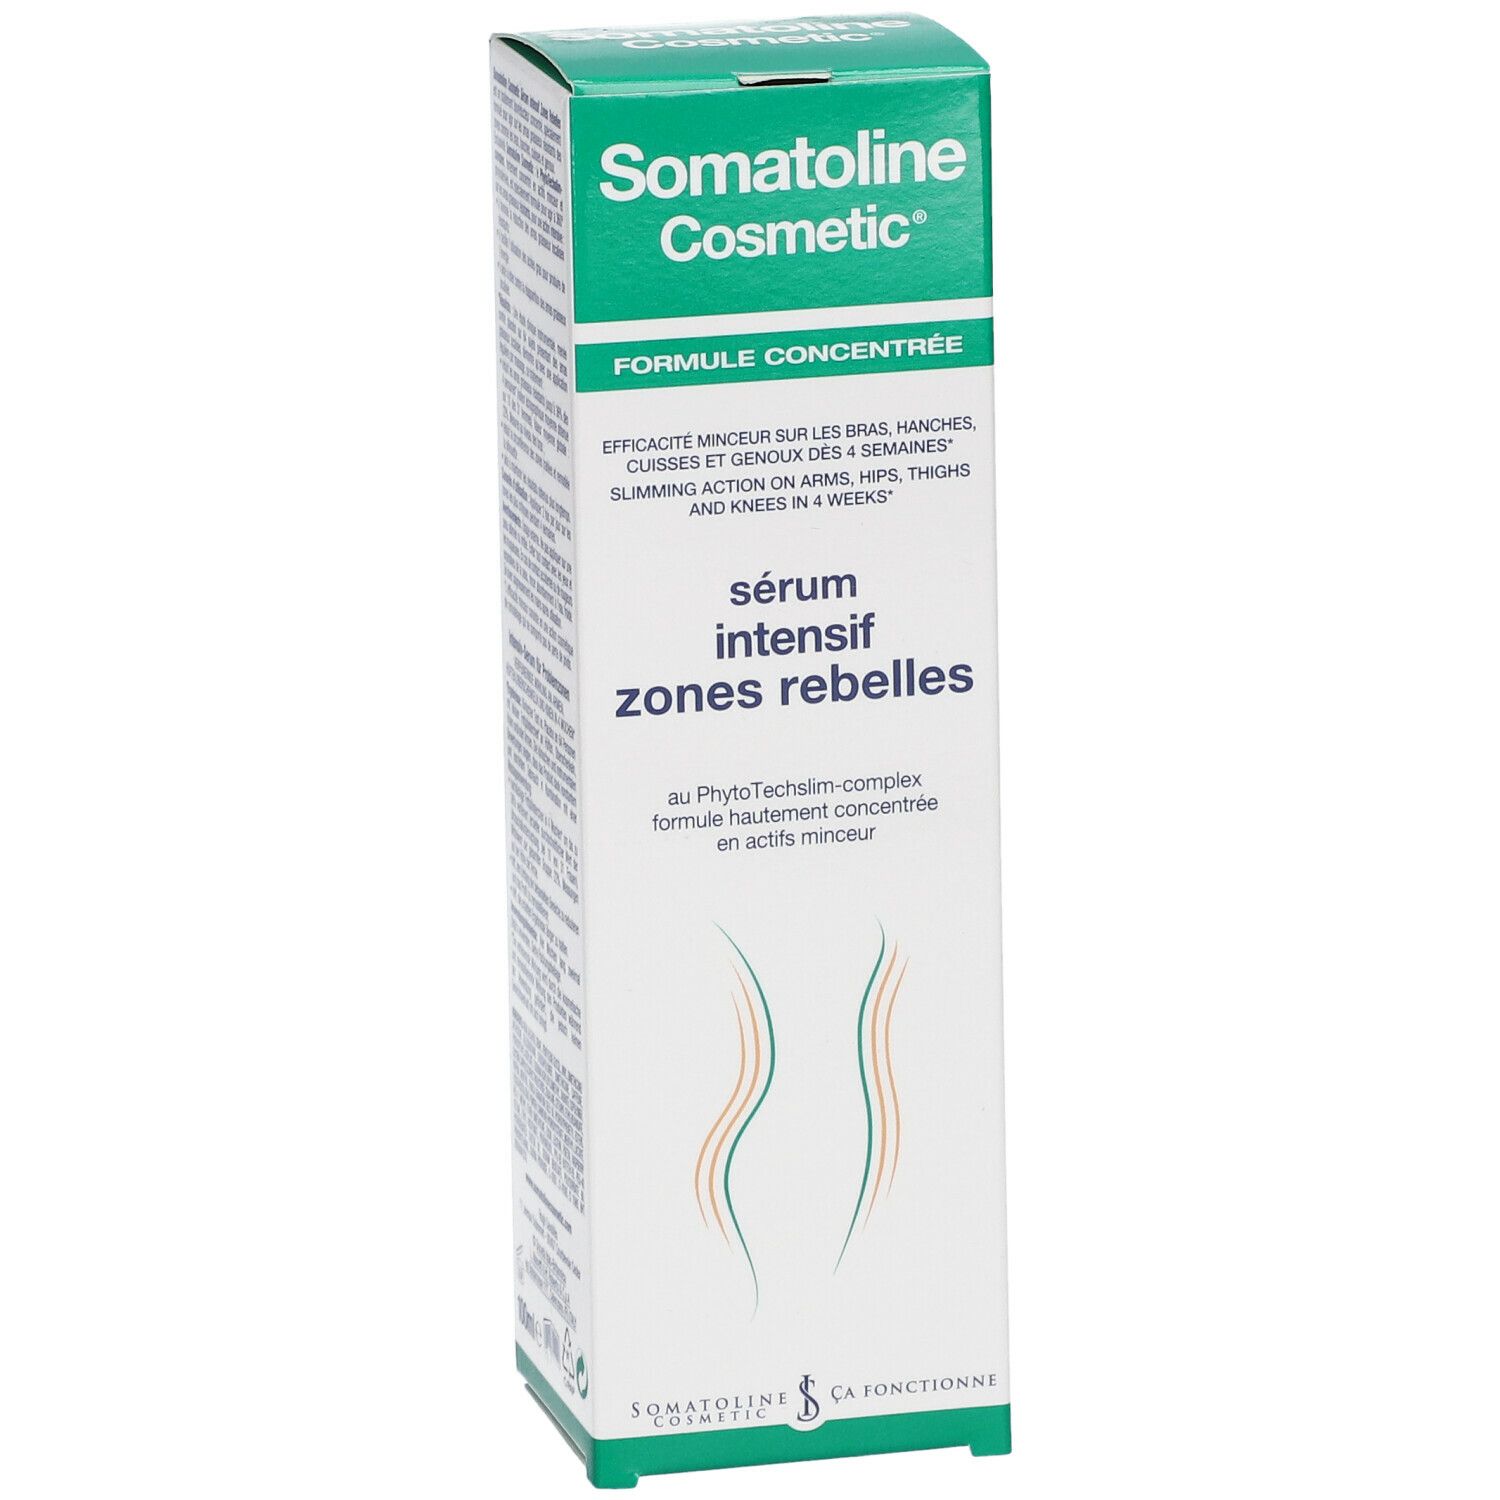 Somatoline Cosmetic® Intensivbehandlung von Rebellengebieten